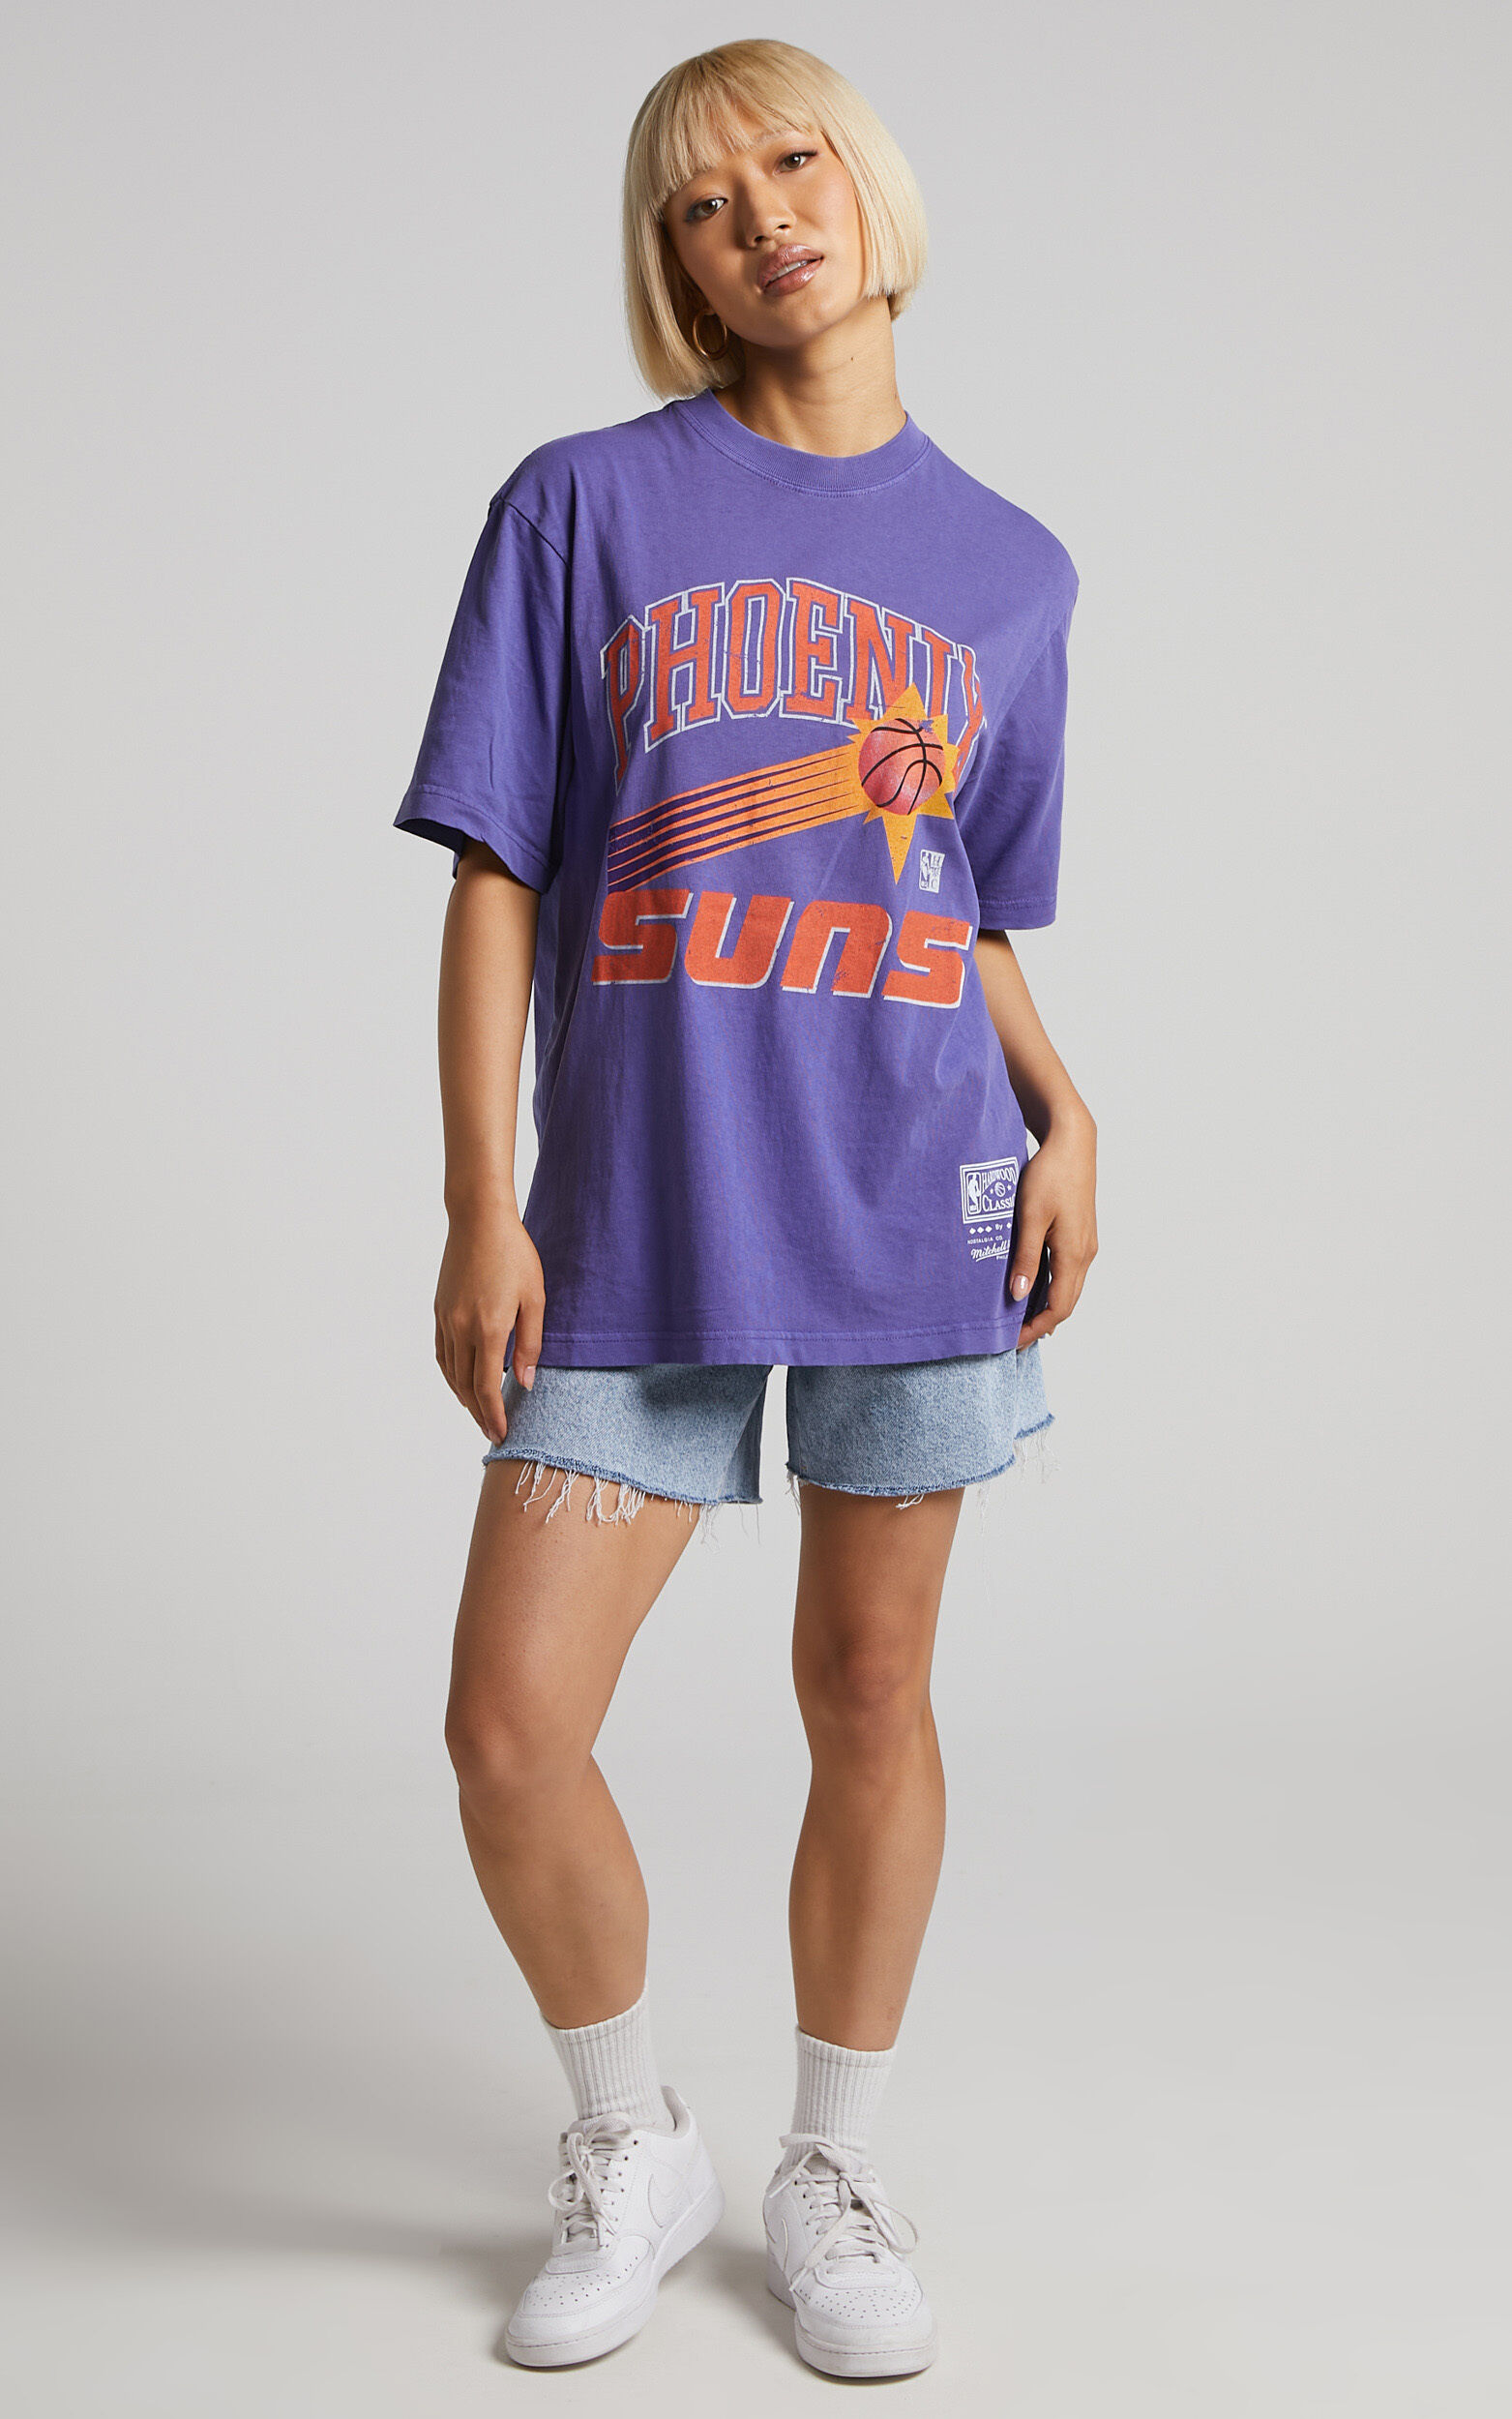 Mitchell & Ness - Phoenix Suns Team Up Tee in Faded Purple